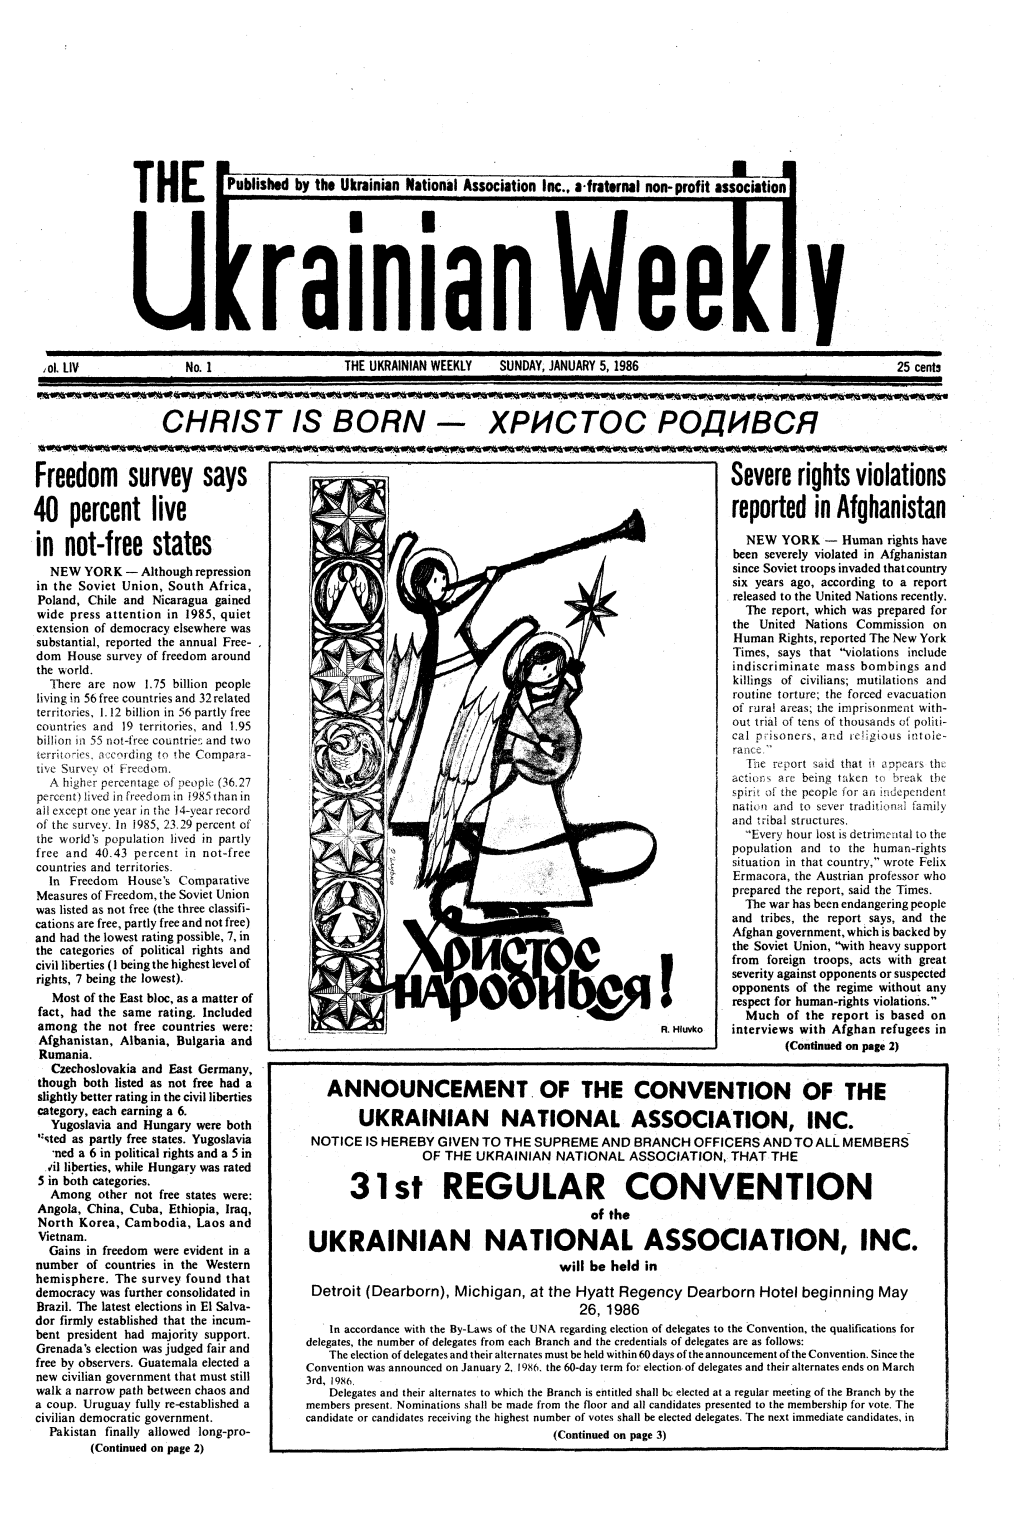 The Ukrainian Weekly 1986, No.1